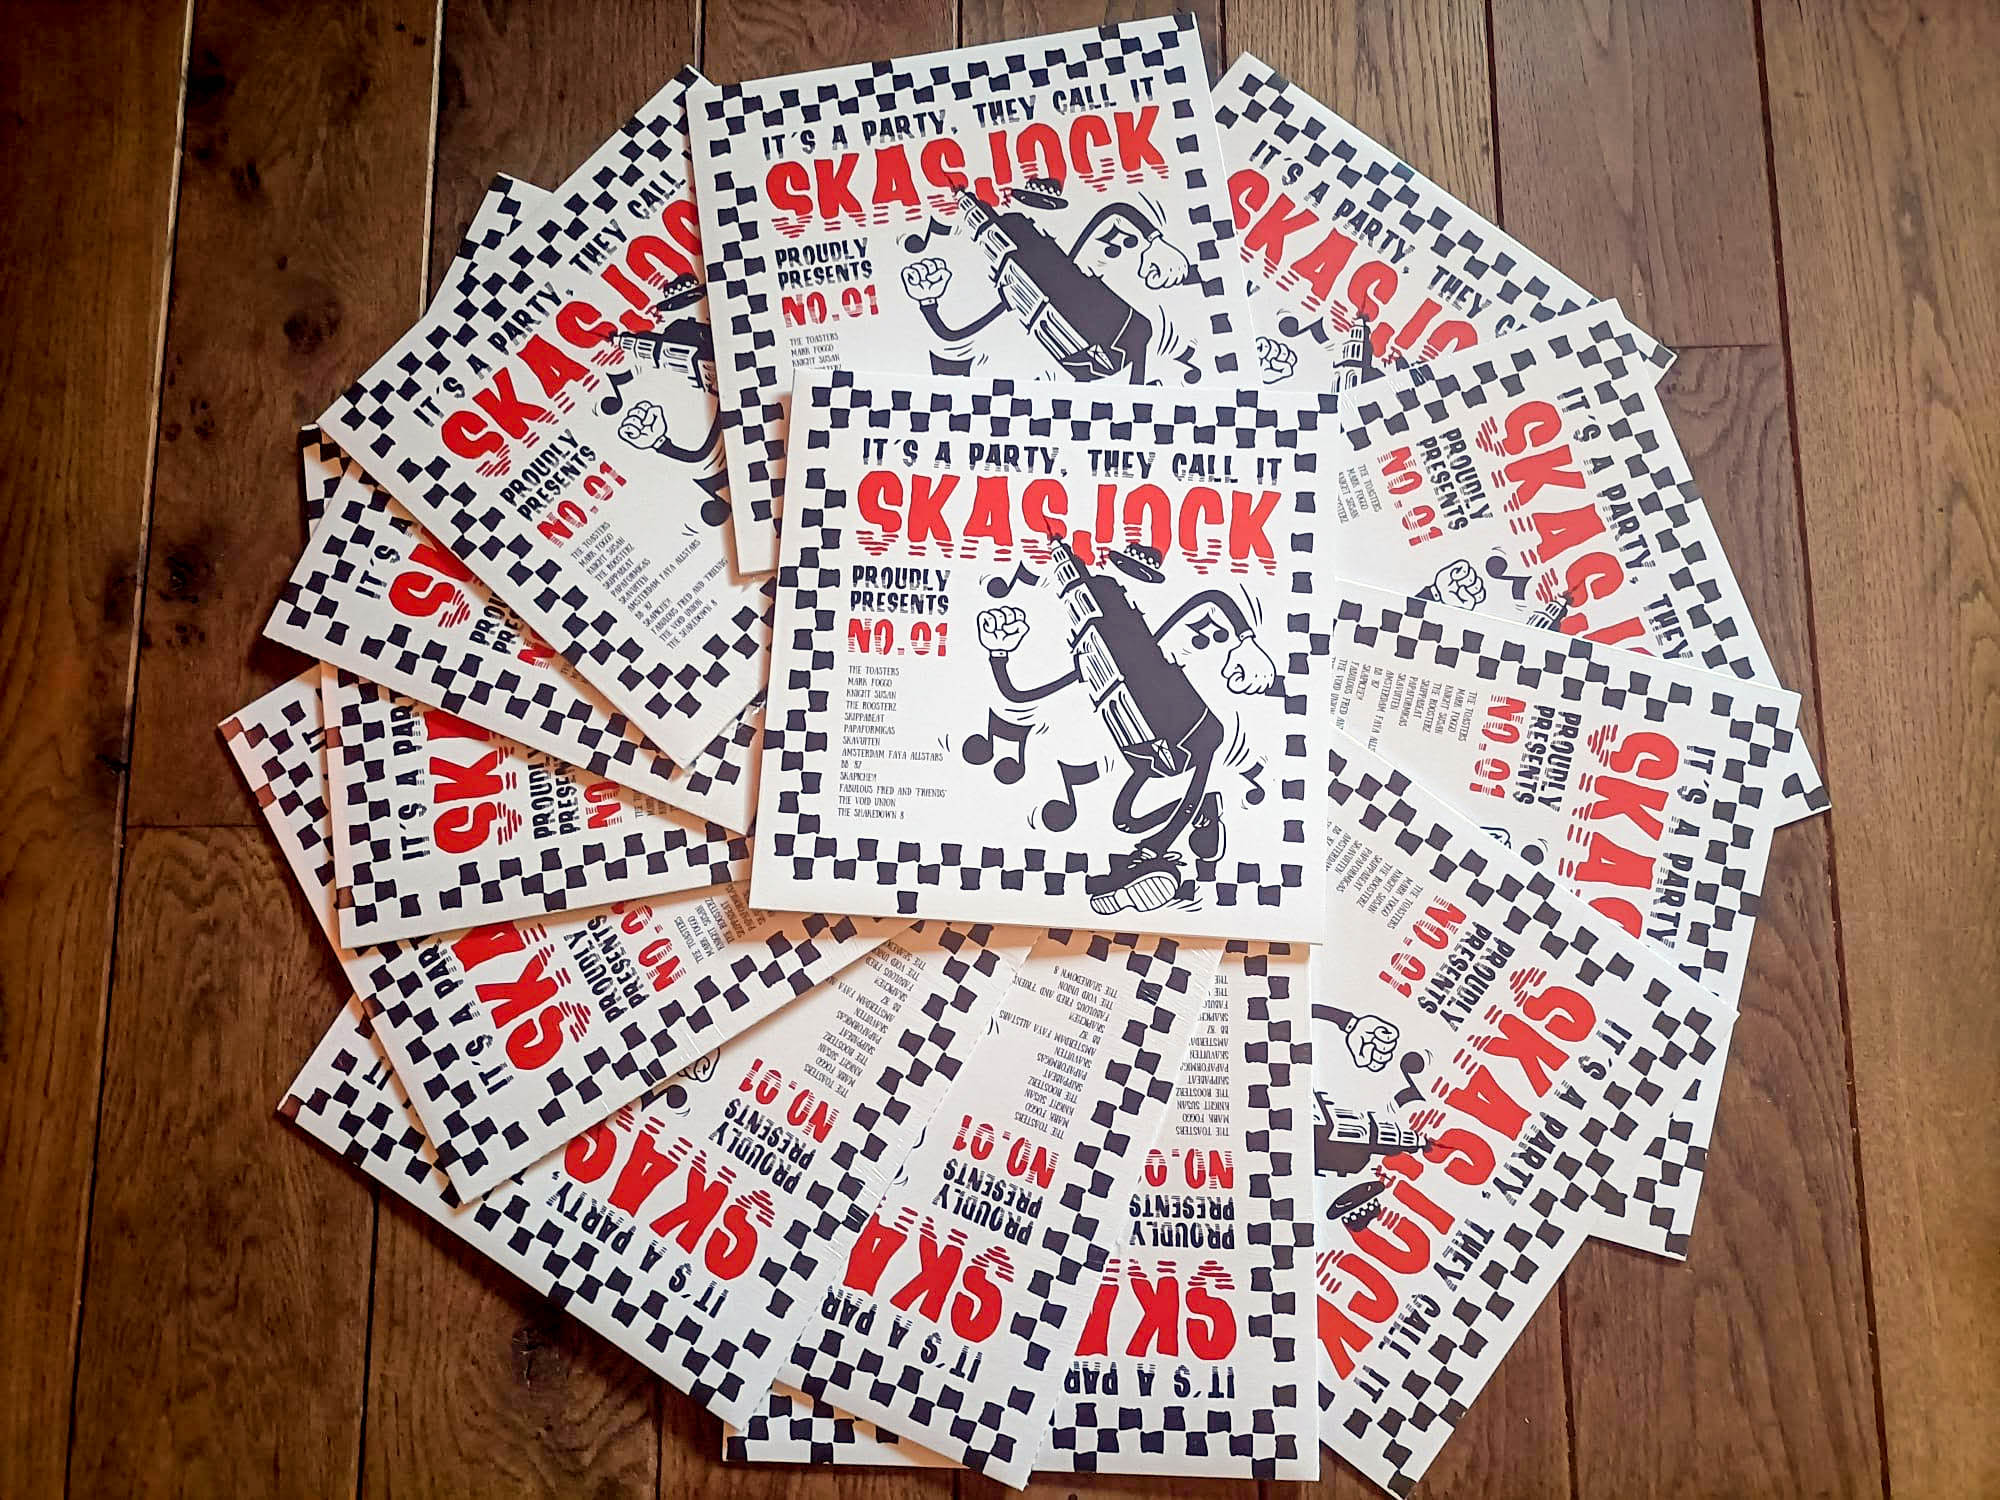 SkaSjock vinyls